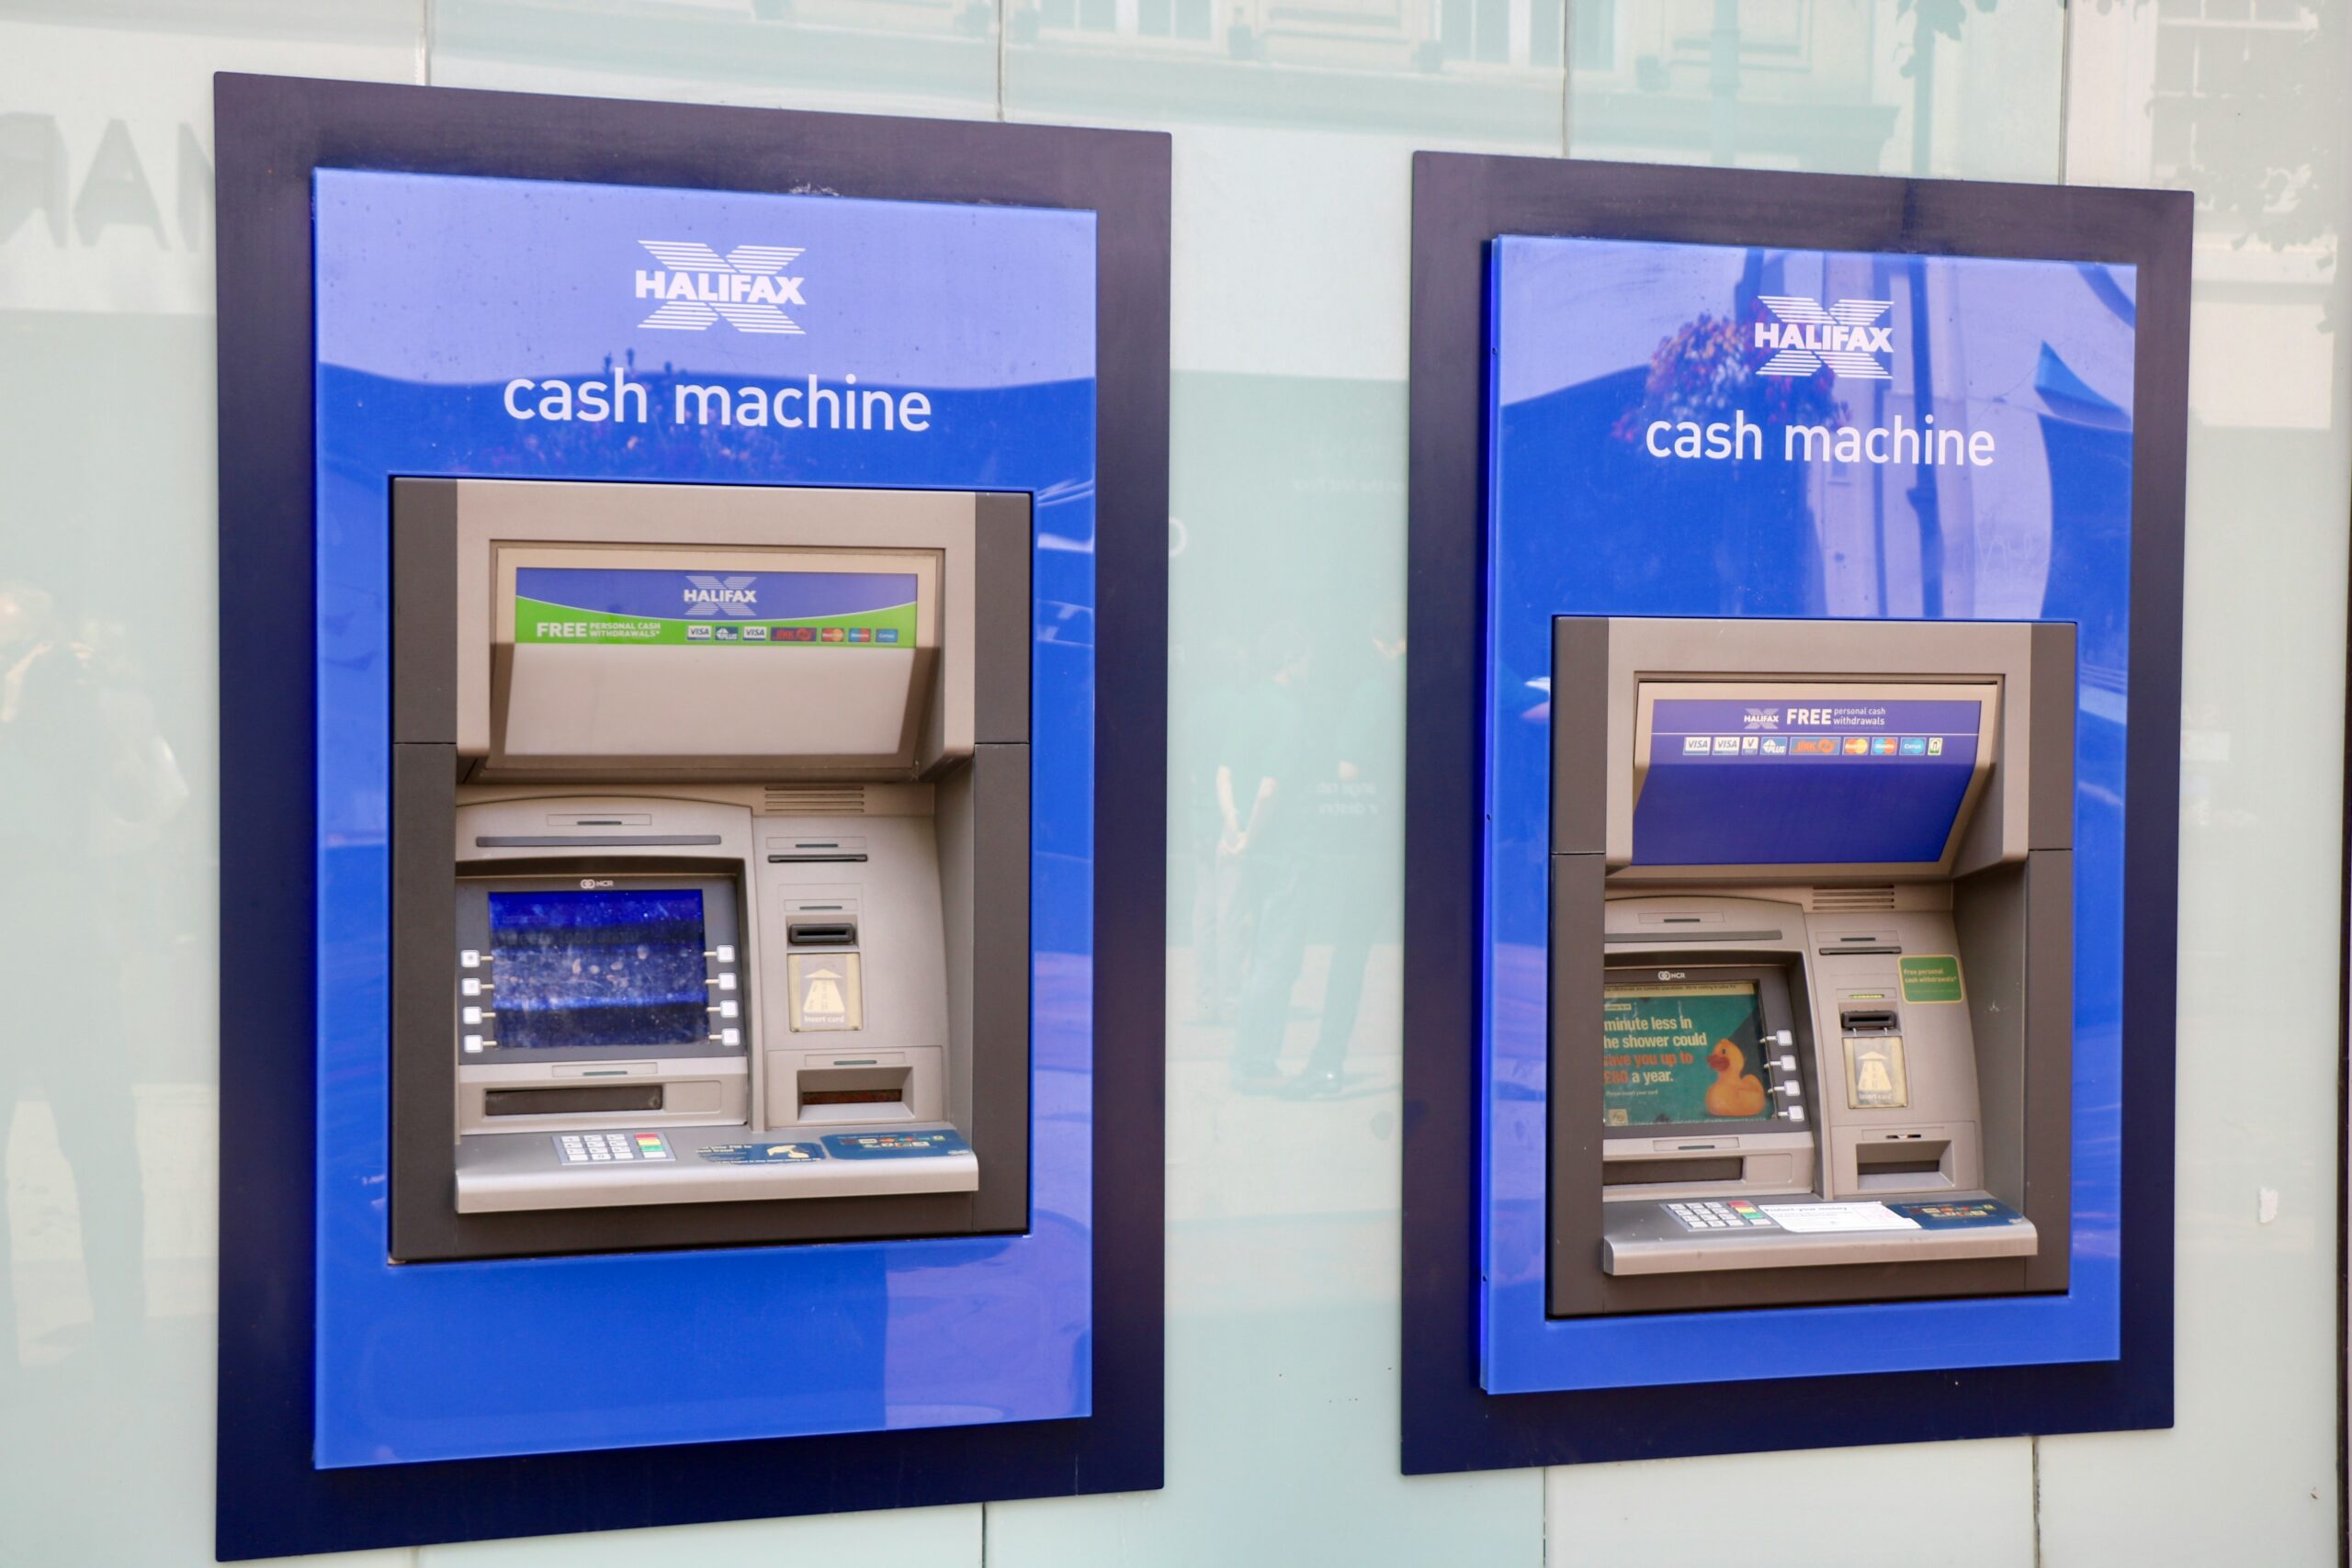 image of two Halifax cash machines